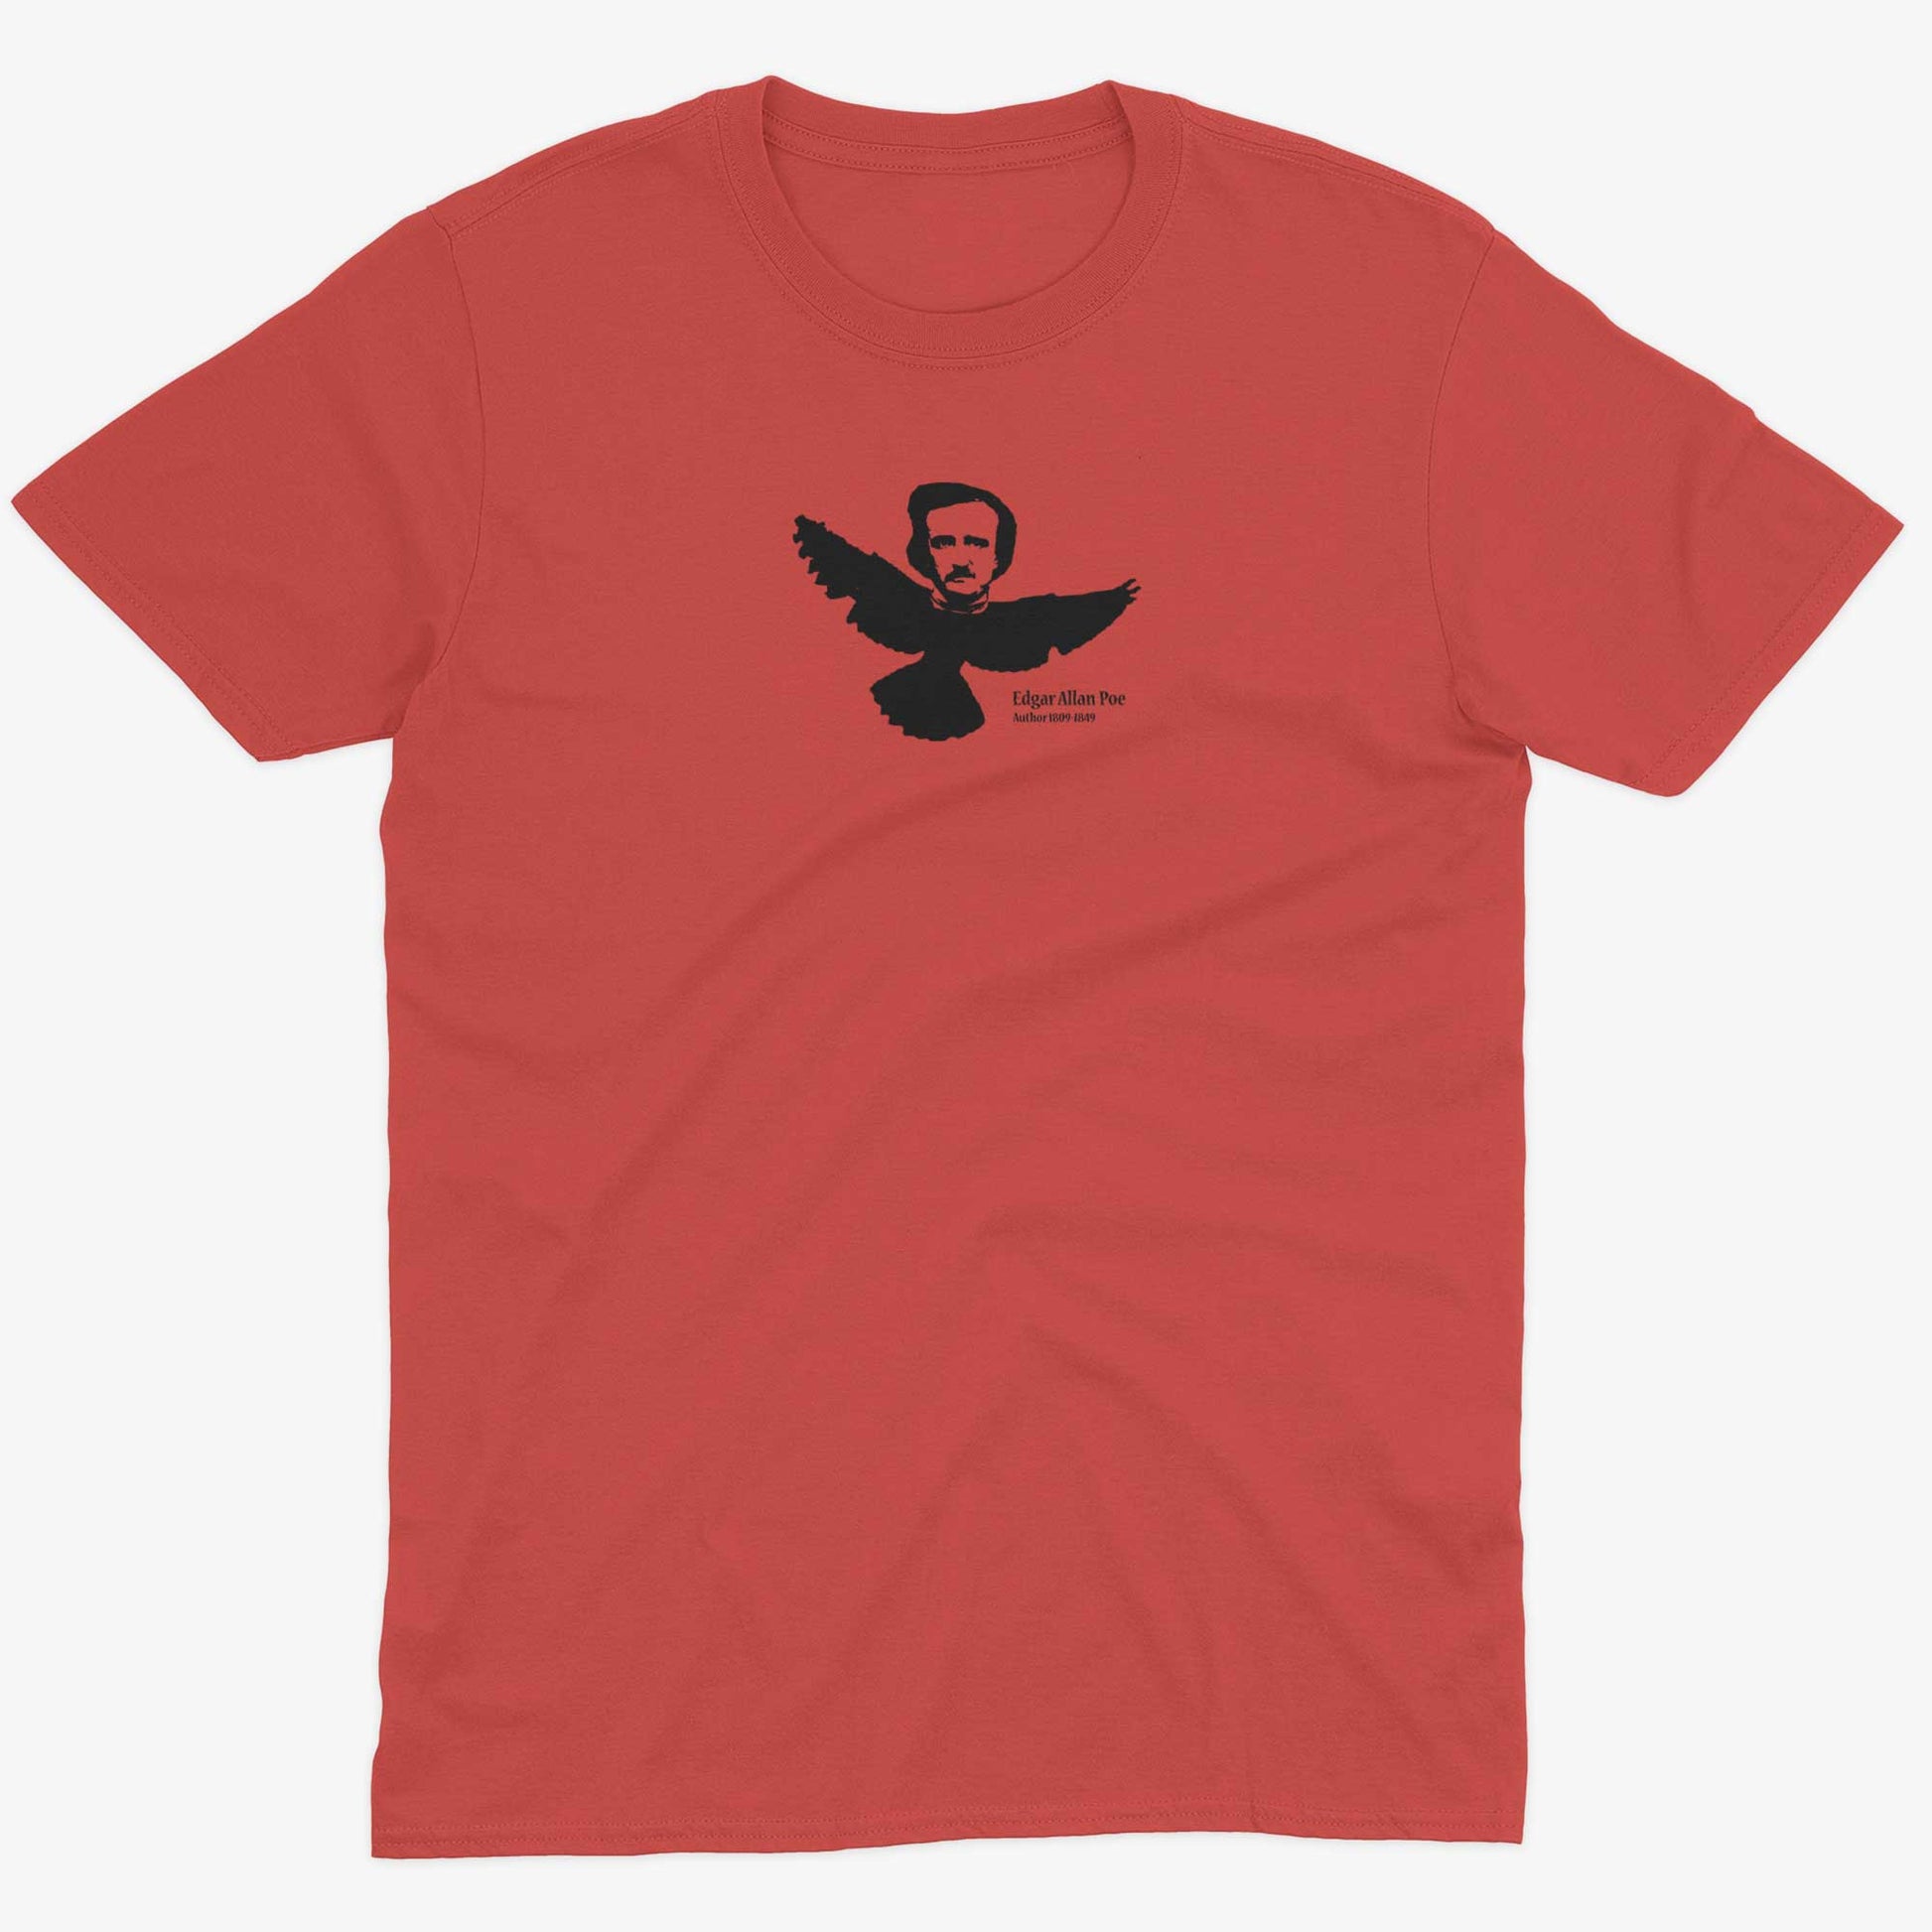 Edgar Allan Poe Unisex Or Women's Cotton T-shirt-Red-Unisex